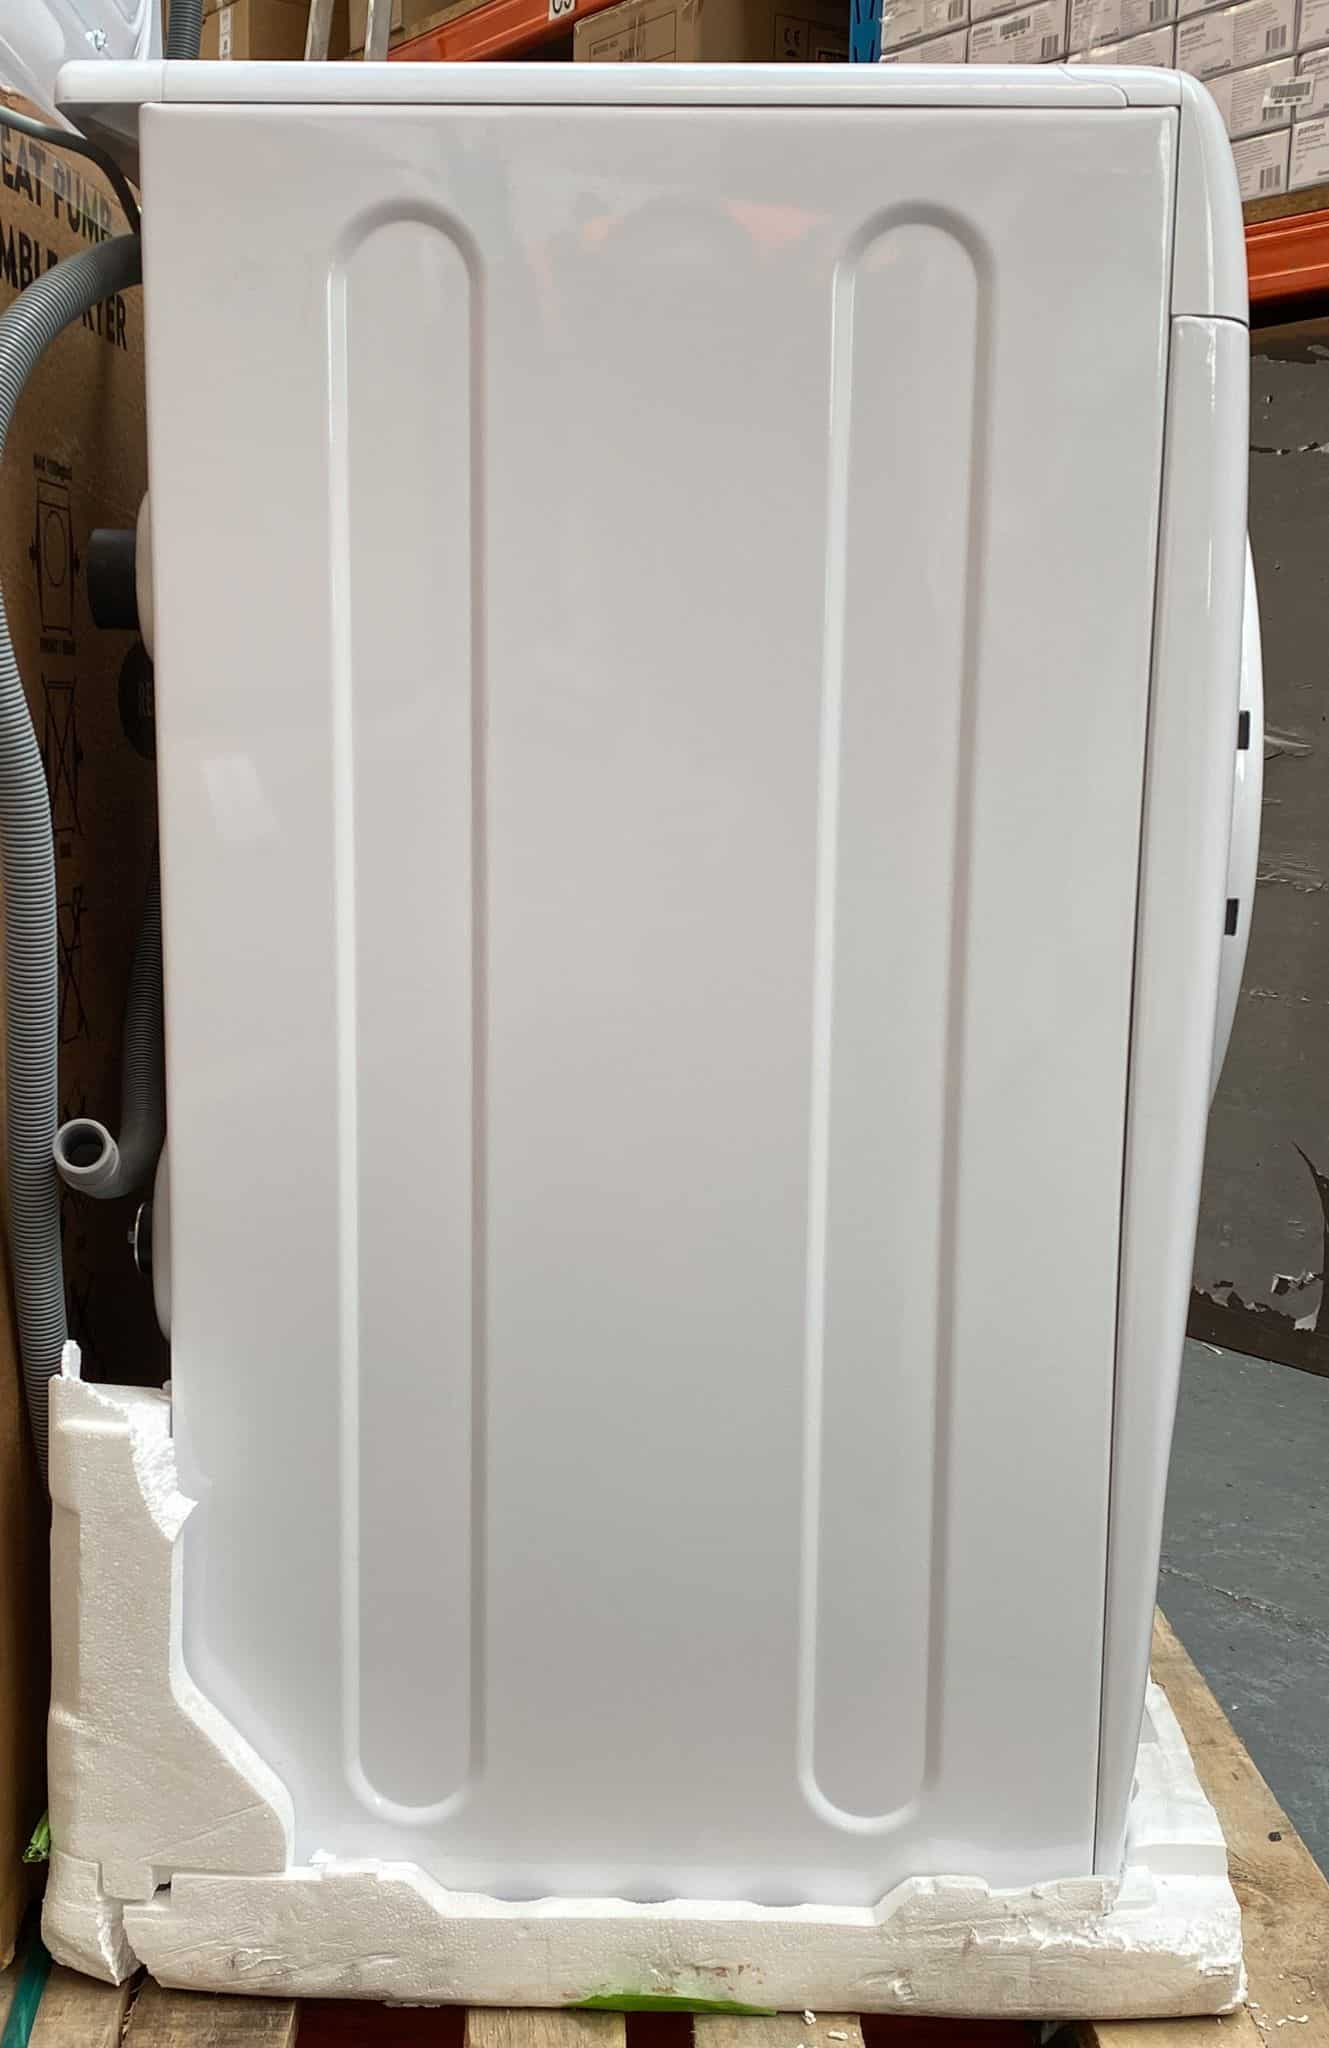 Candy CS 1482DE/1-80 1400rpm Freestanding Washing machine White, 8kg X-Display 7467